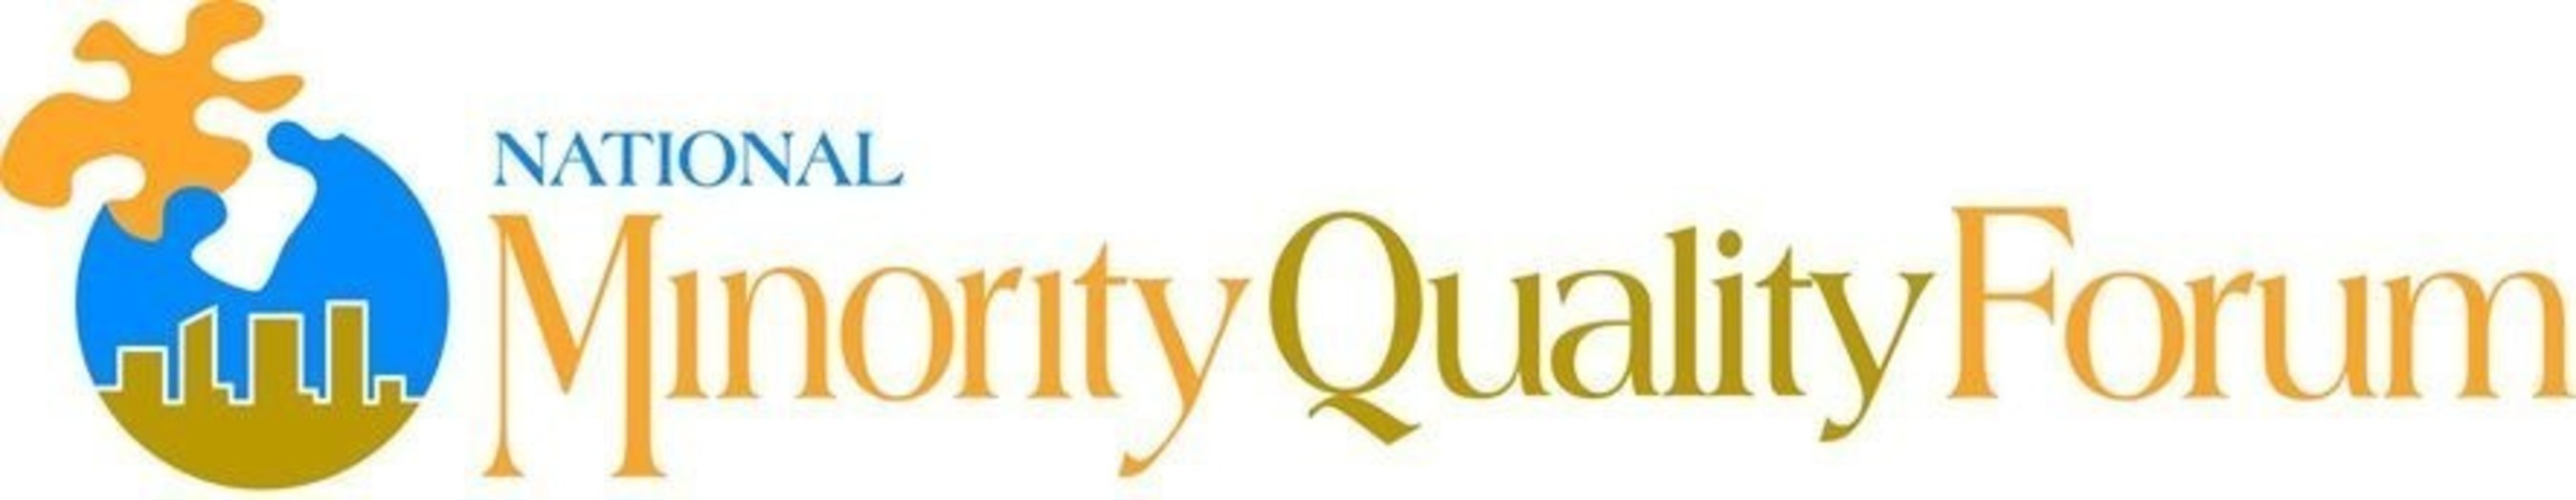 National Minority Quality Forum logo (PRNewsFoto/The National Minority Quality...)